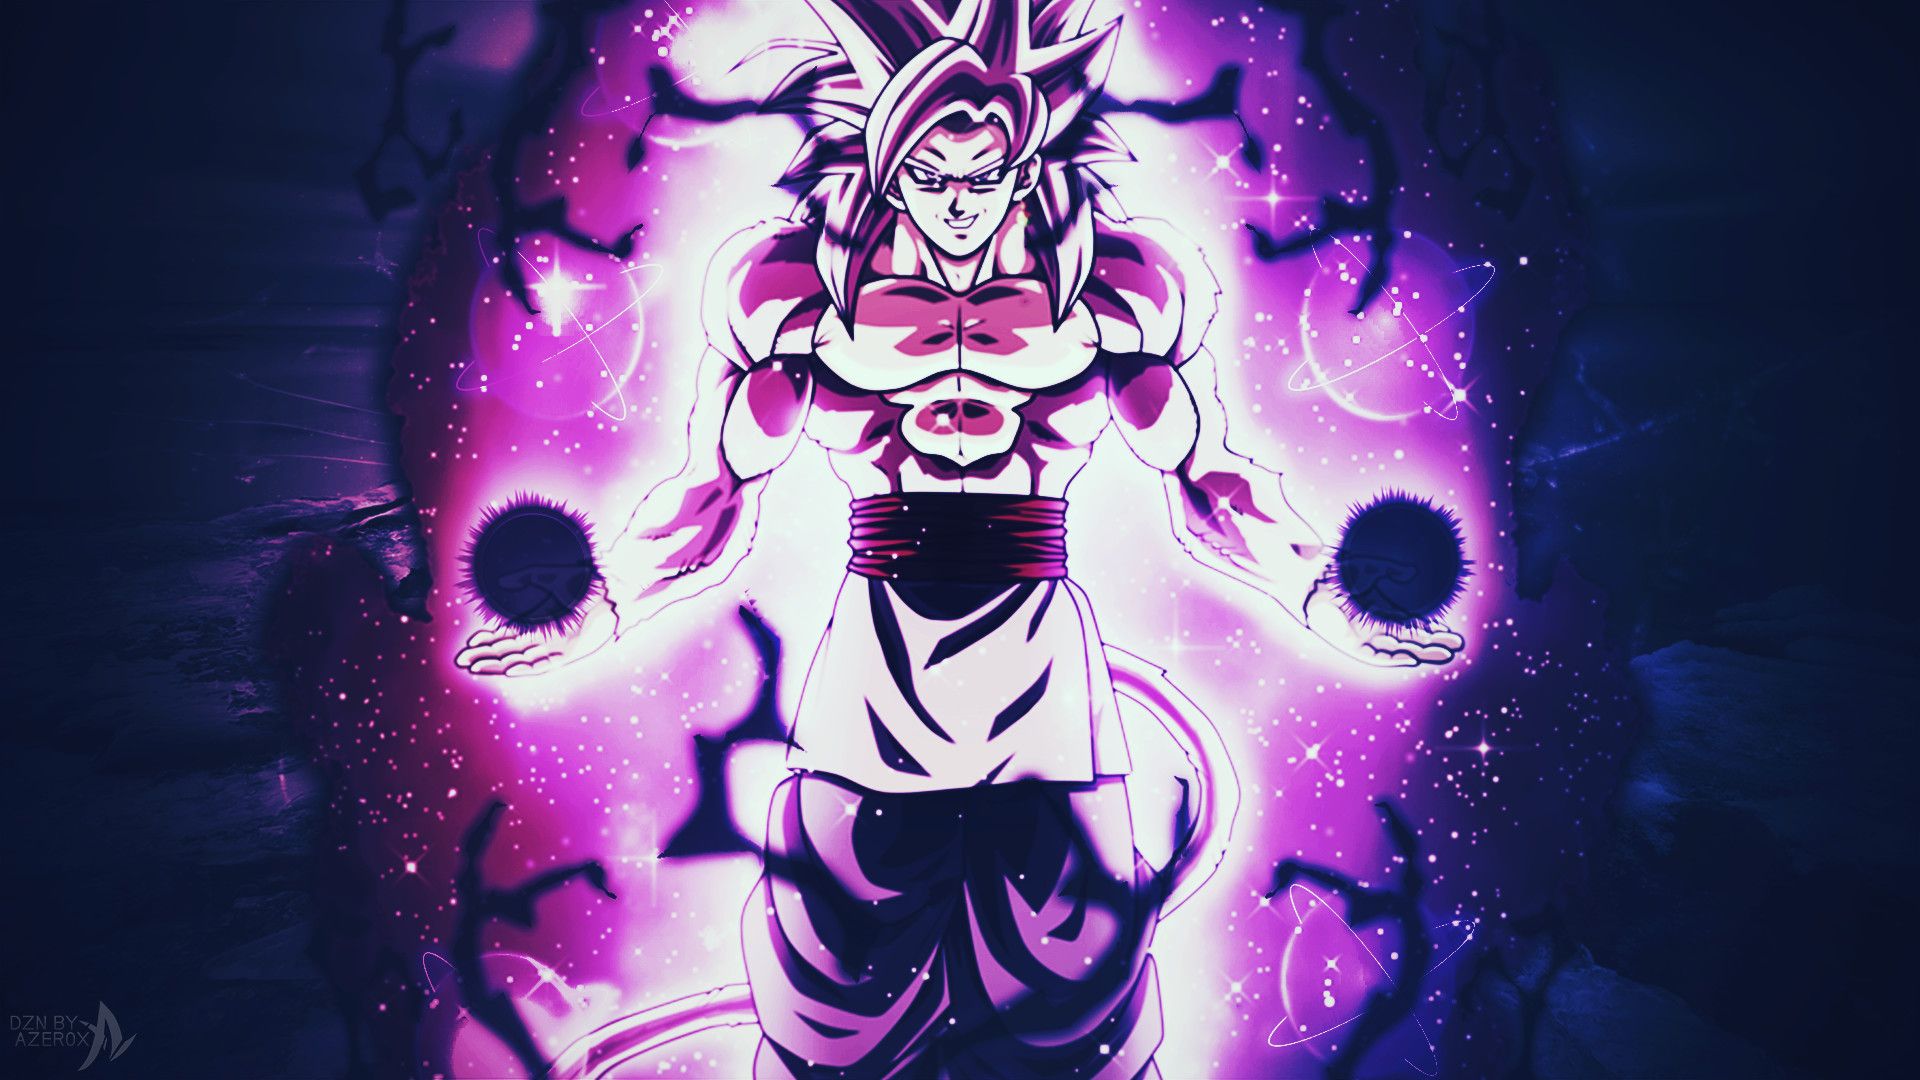 Goku black supreme wallpaper by CreepySilk - Download on ZEDGE™